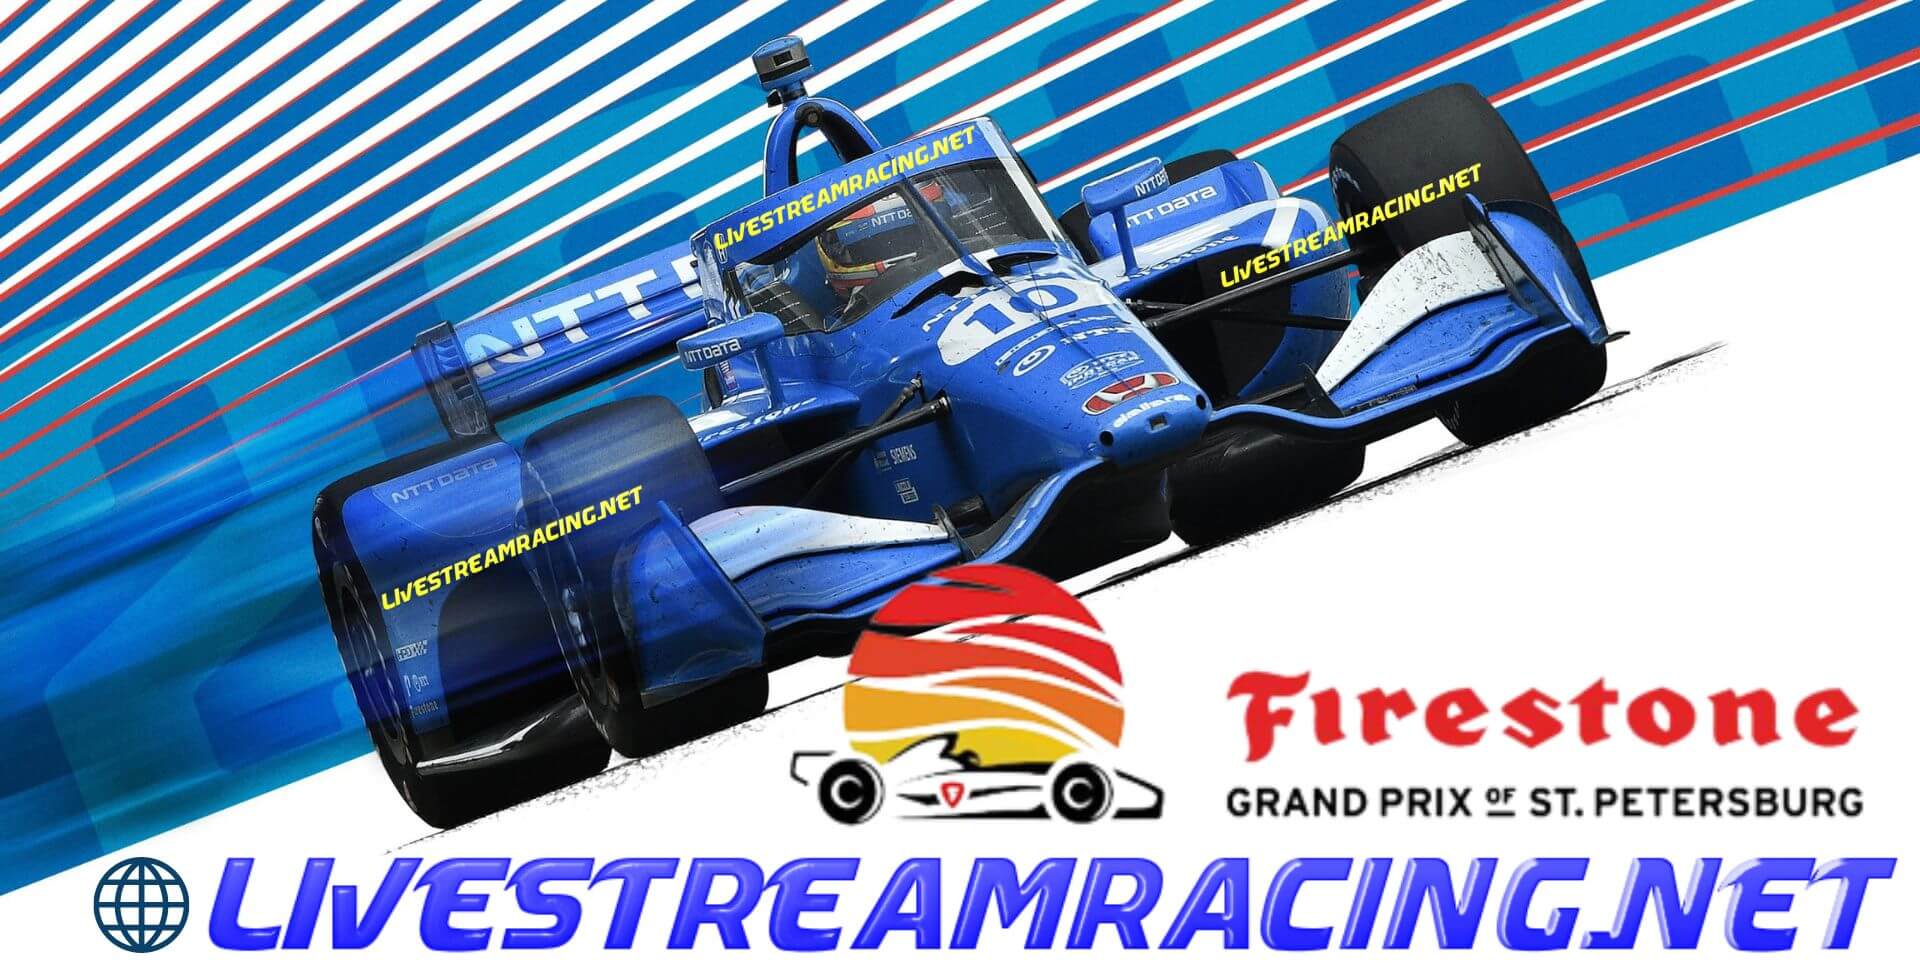 Firestone Grand Prix Of St. Petersburg Live Streaming